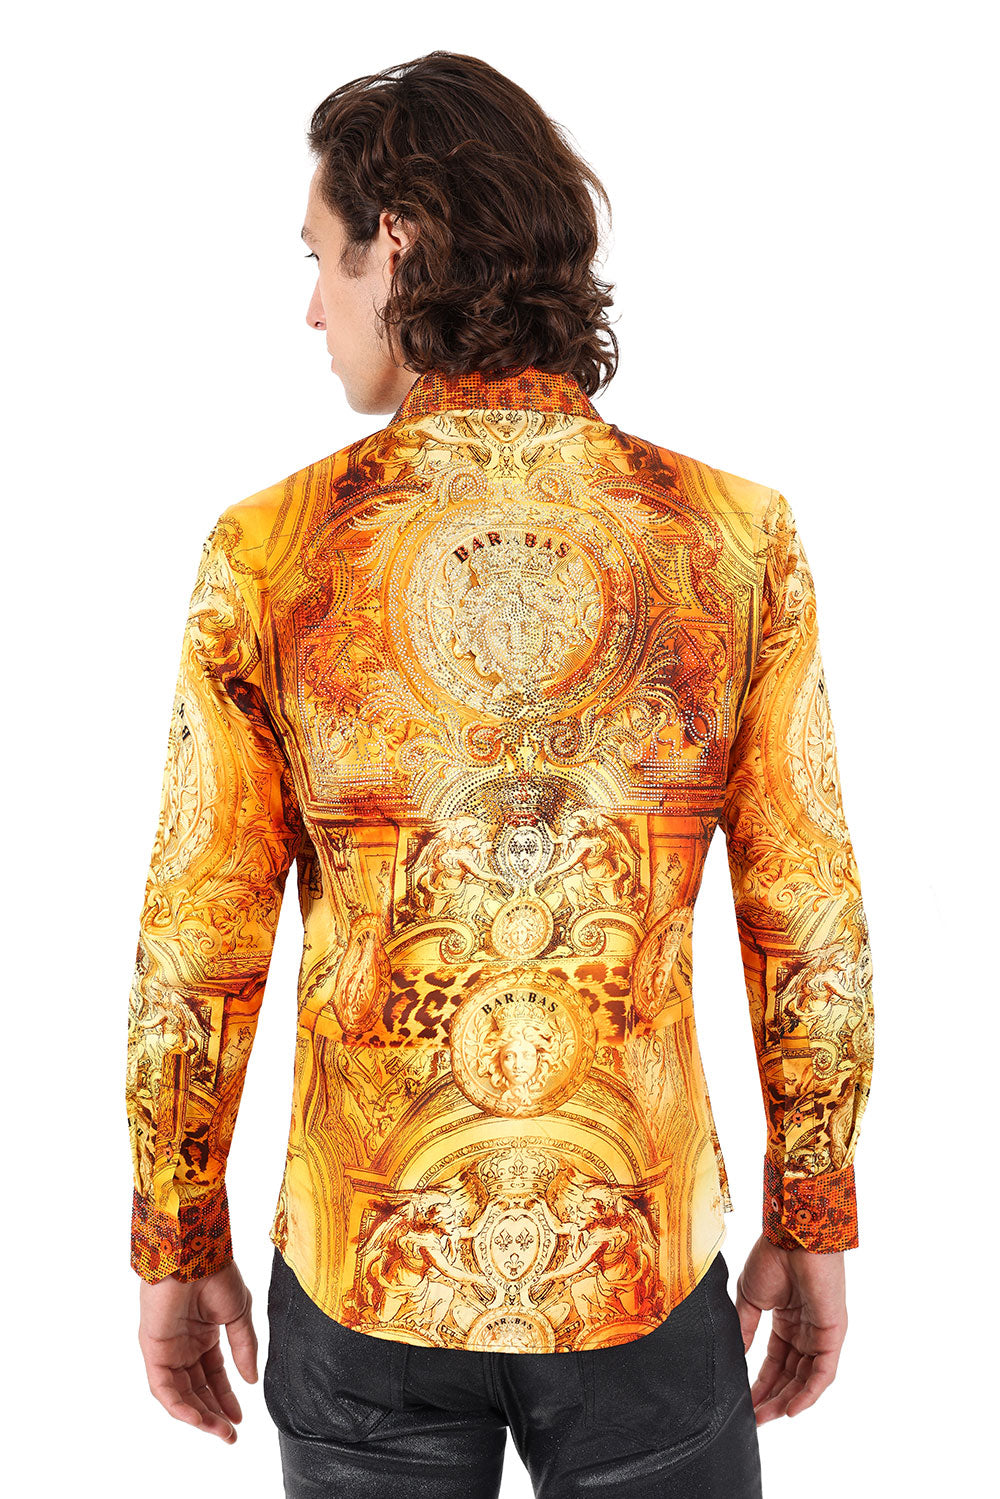 BARABAS Men's Rhinestone Medusa Floral Angeles Baroque Shirt 2SPR220 Rust